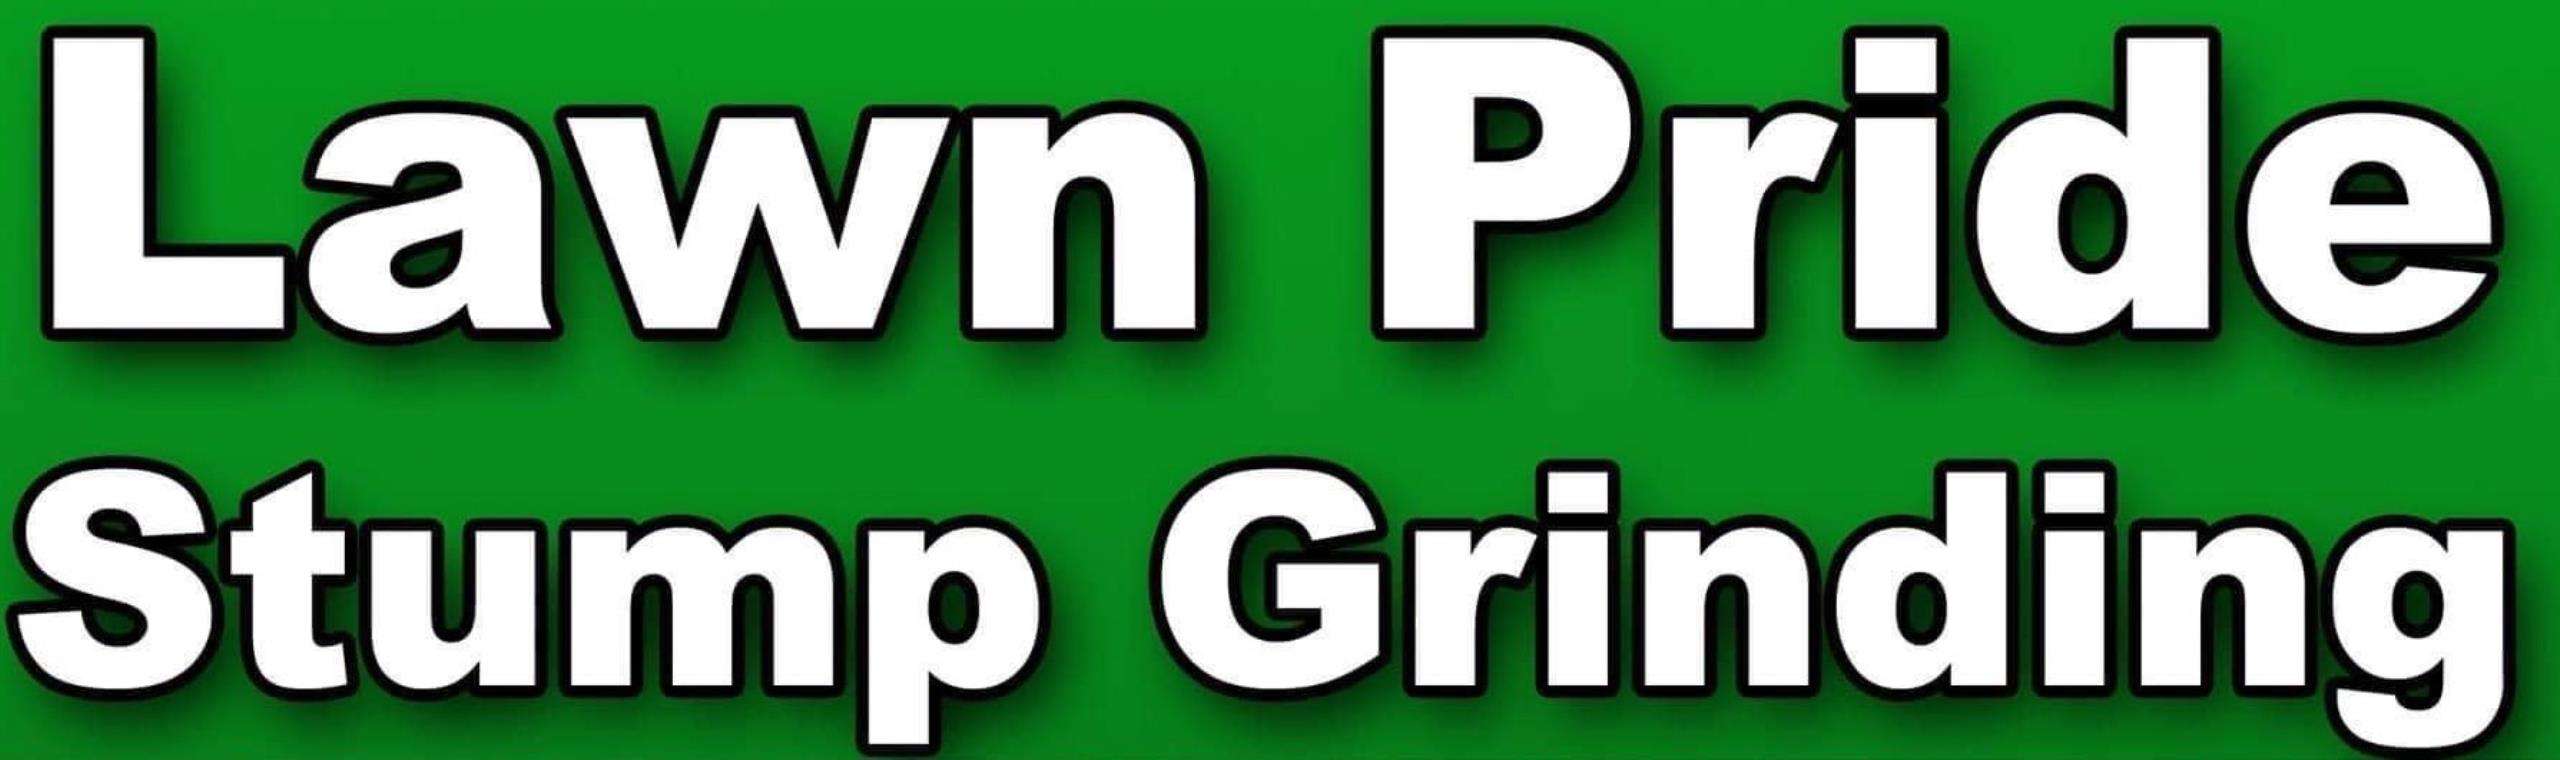 Lawn Pride Stump Grinding Logo